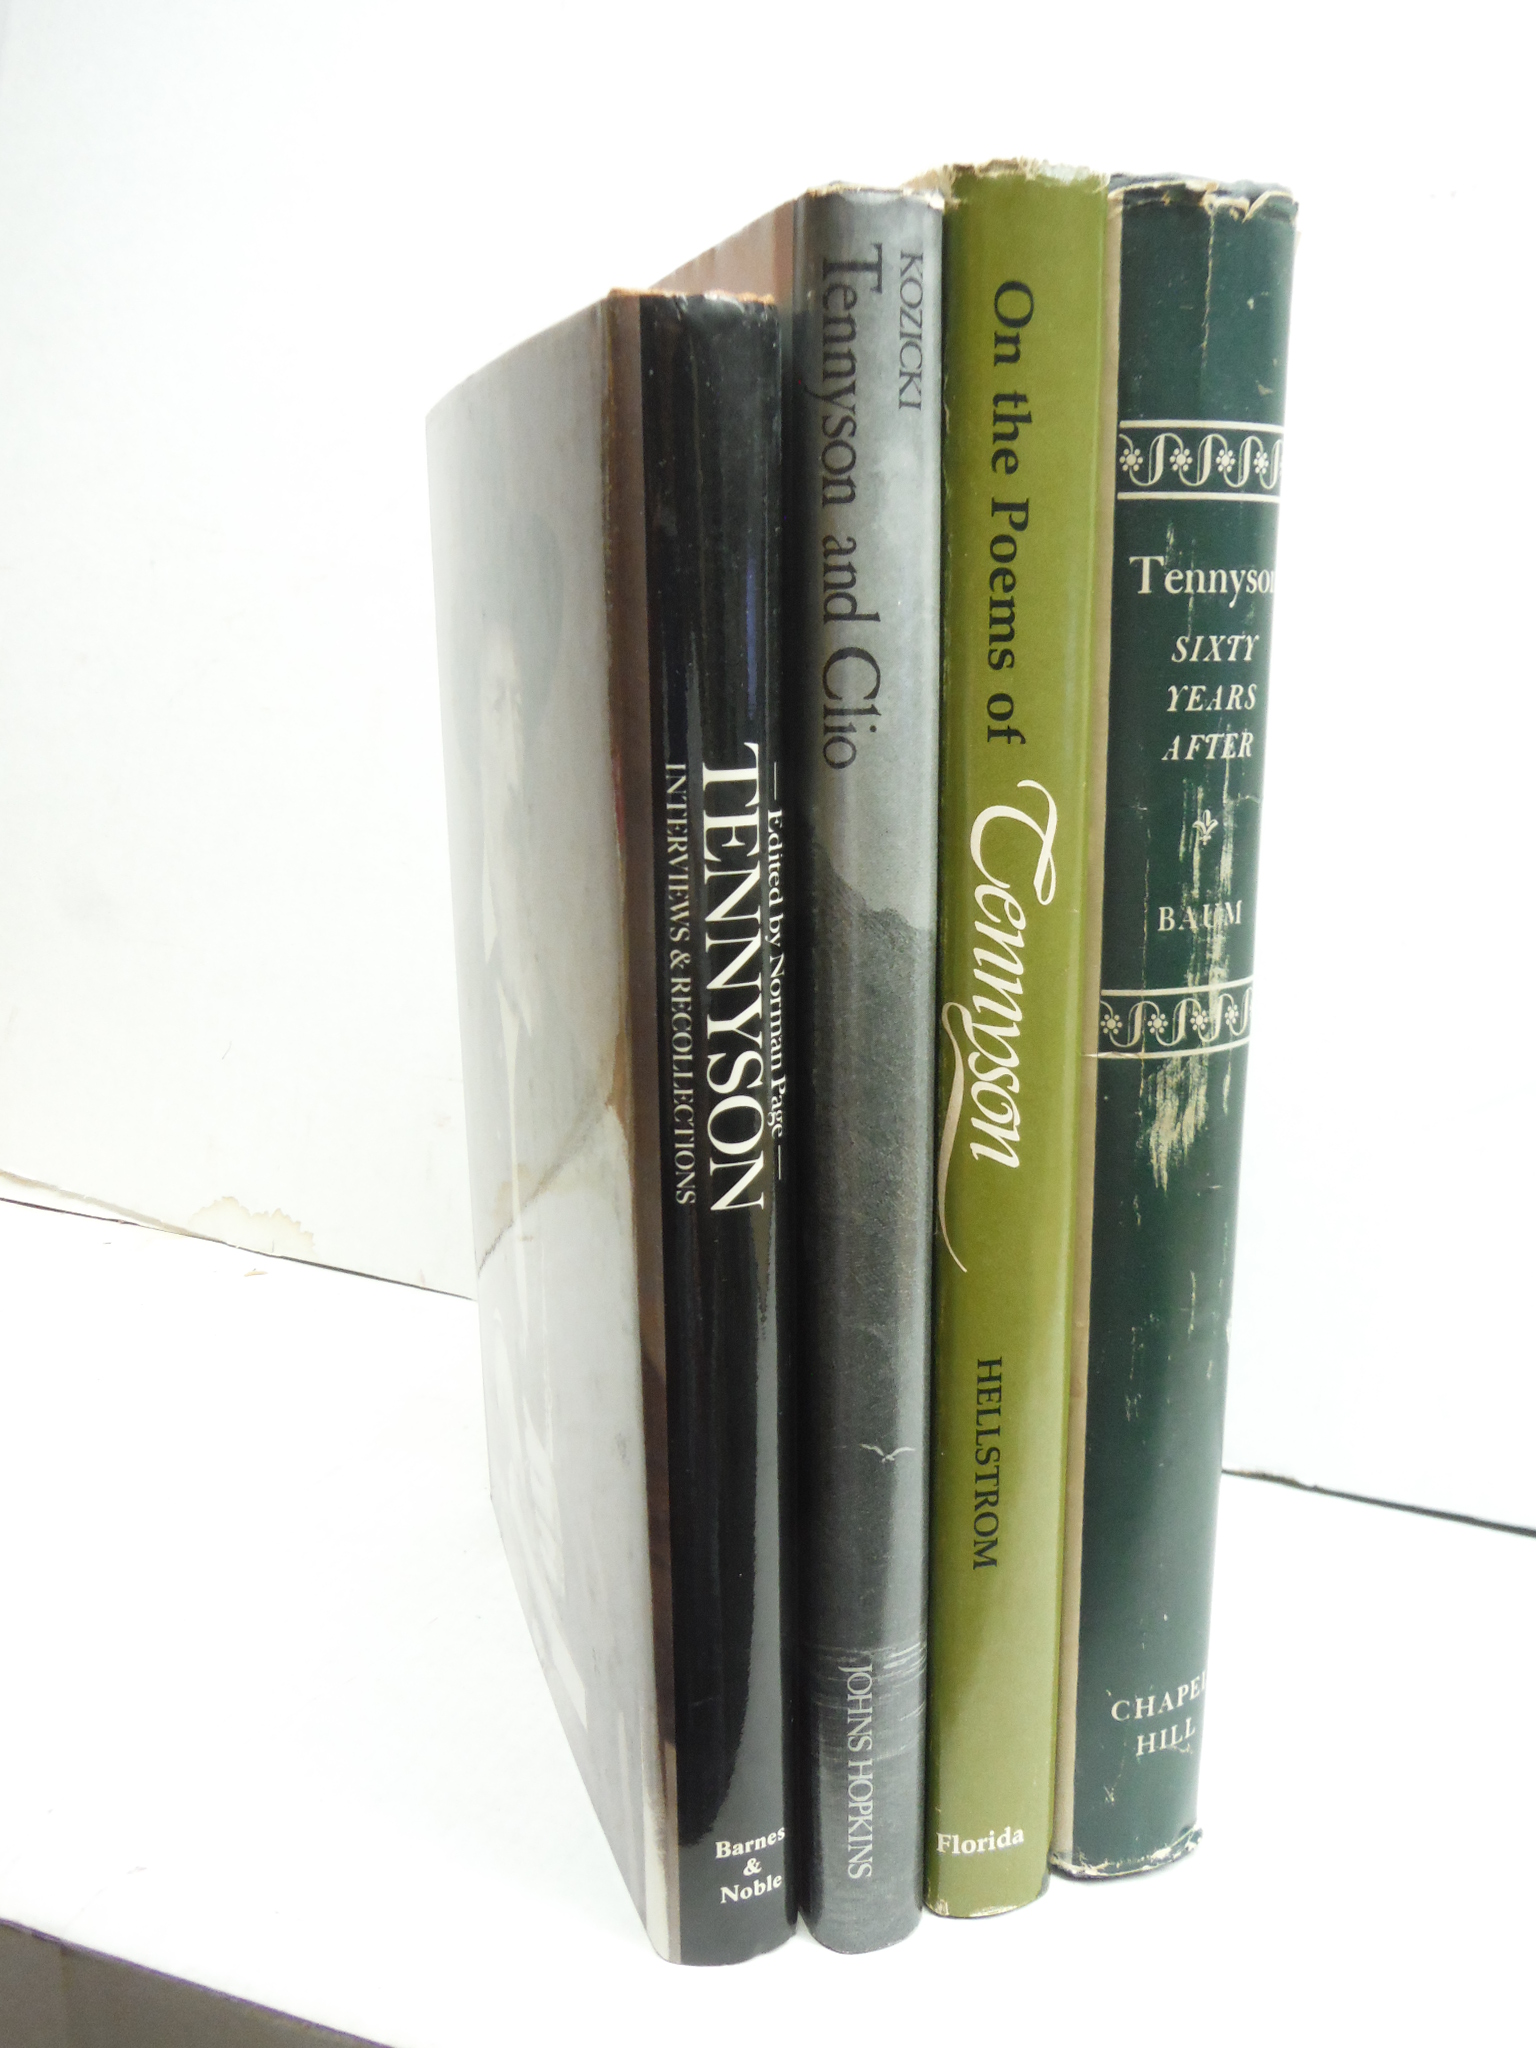 Lot of 4 Good HC books on Tennyson.